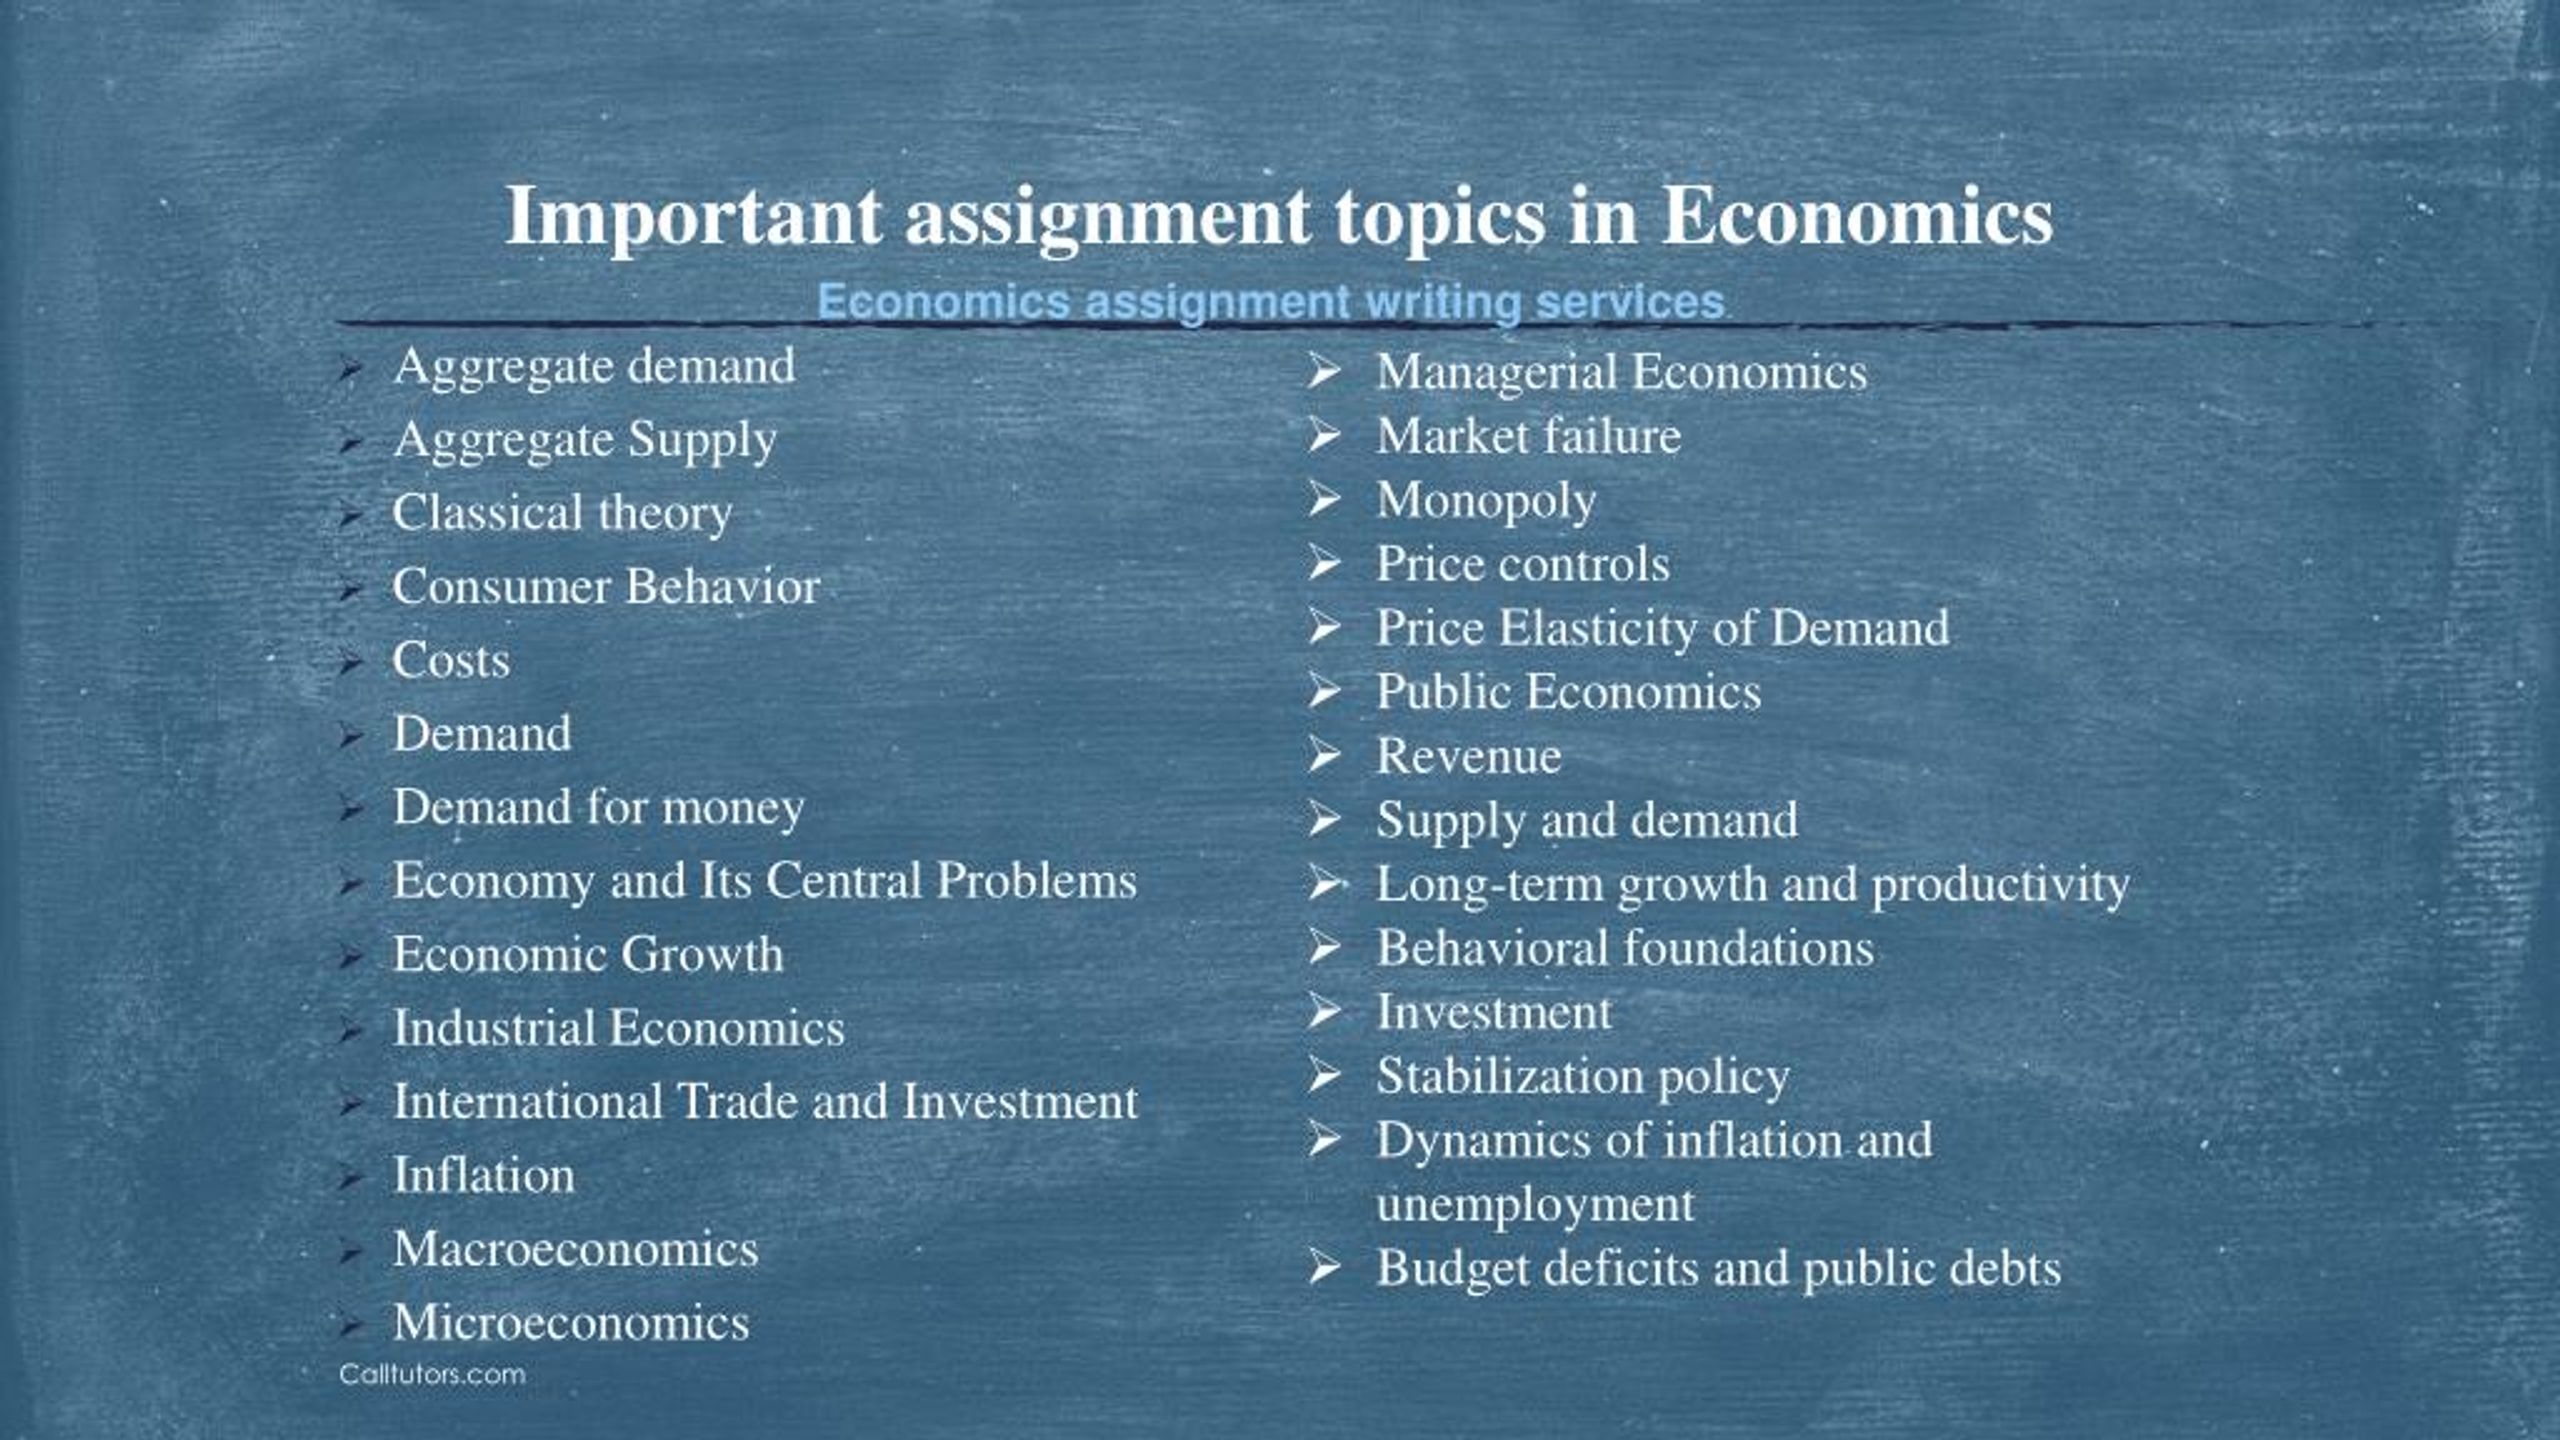 economics assignment topics for college students